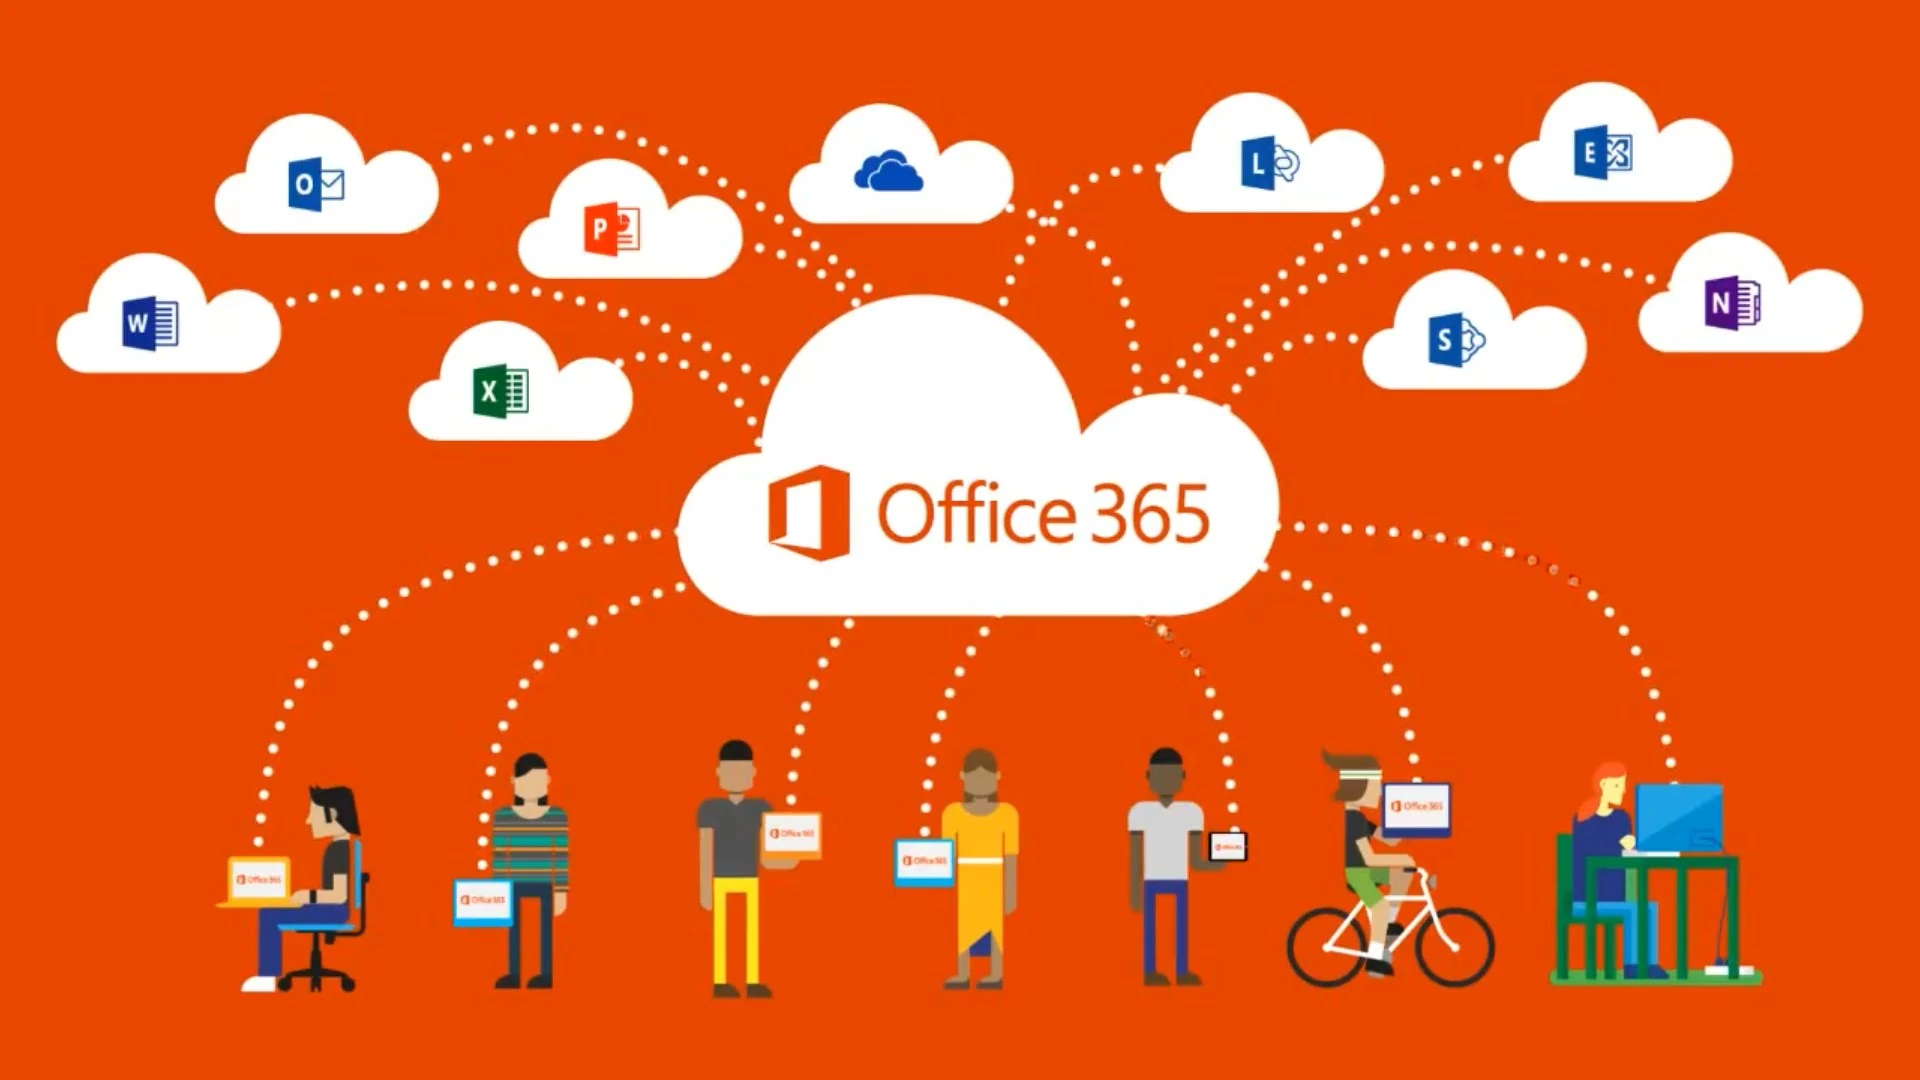 Vuelo trama Admitir Clave gratis para activar Office 365 sin errores 2023